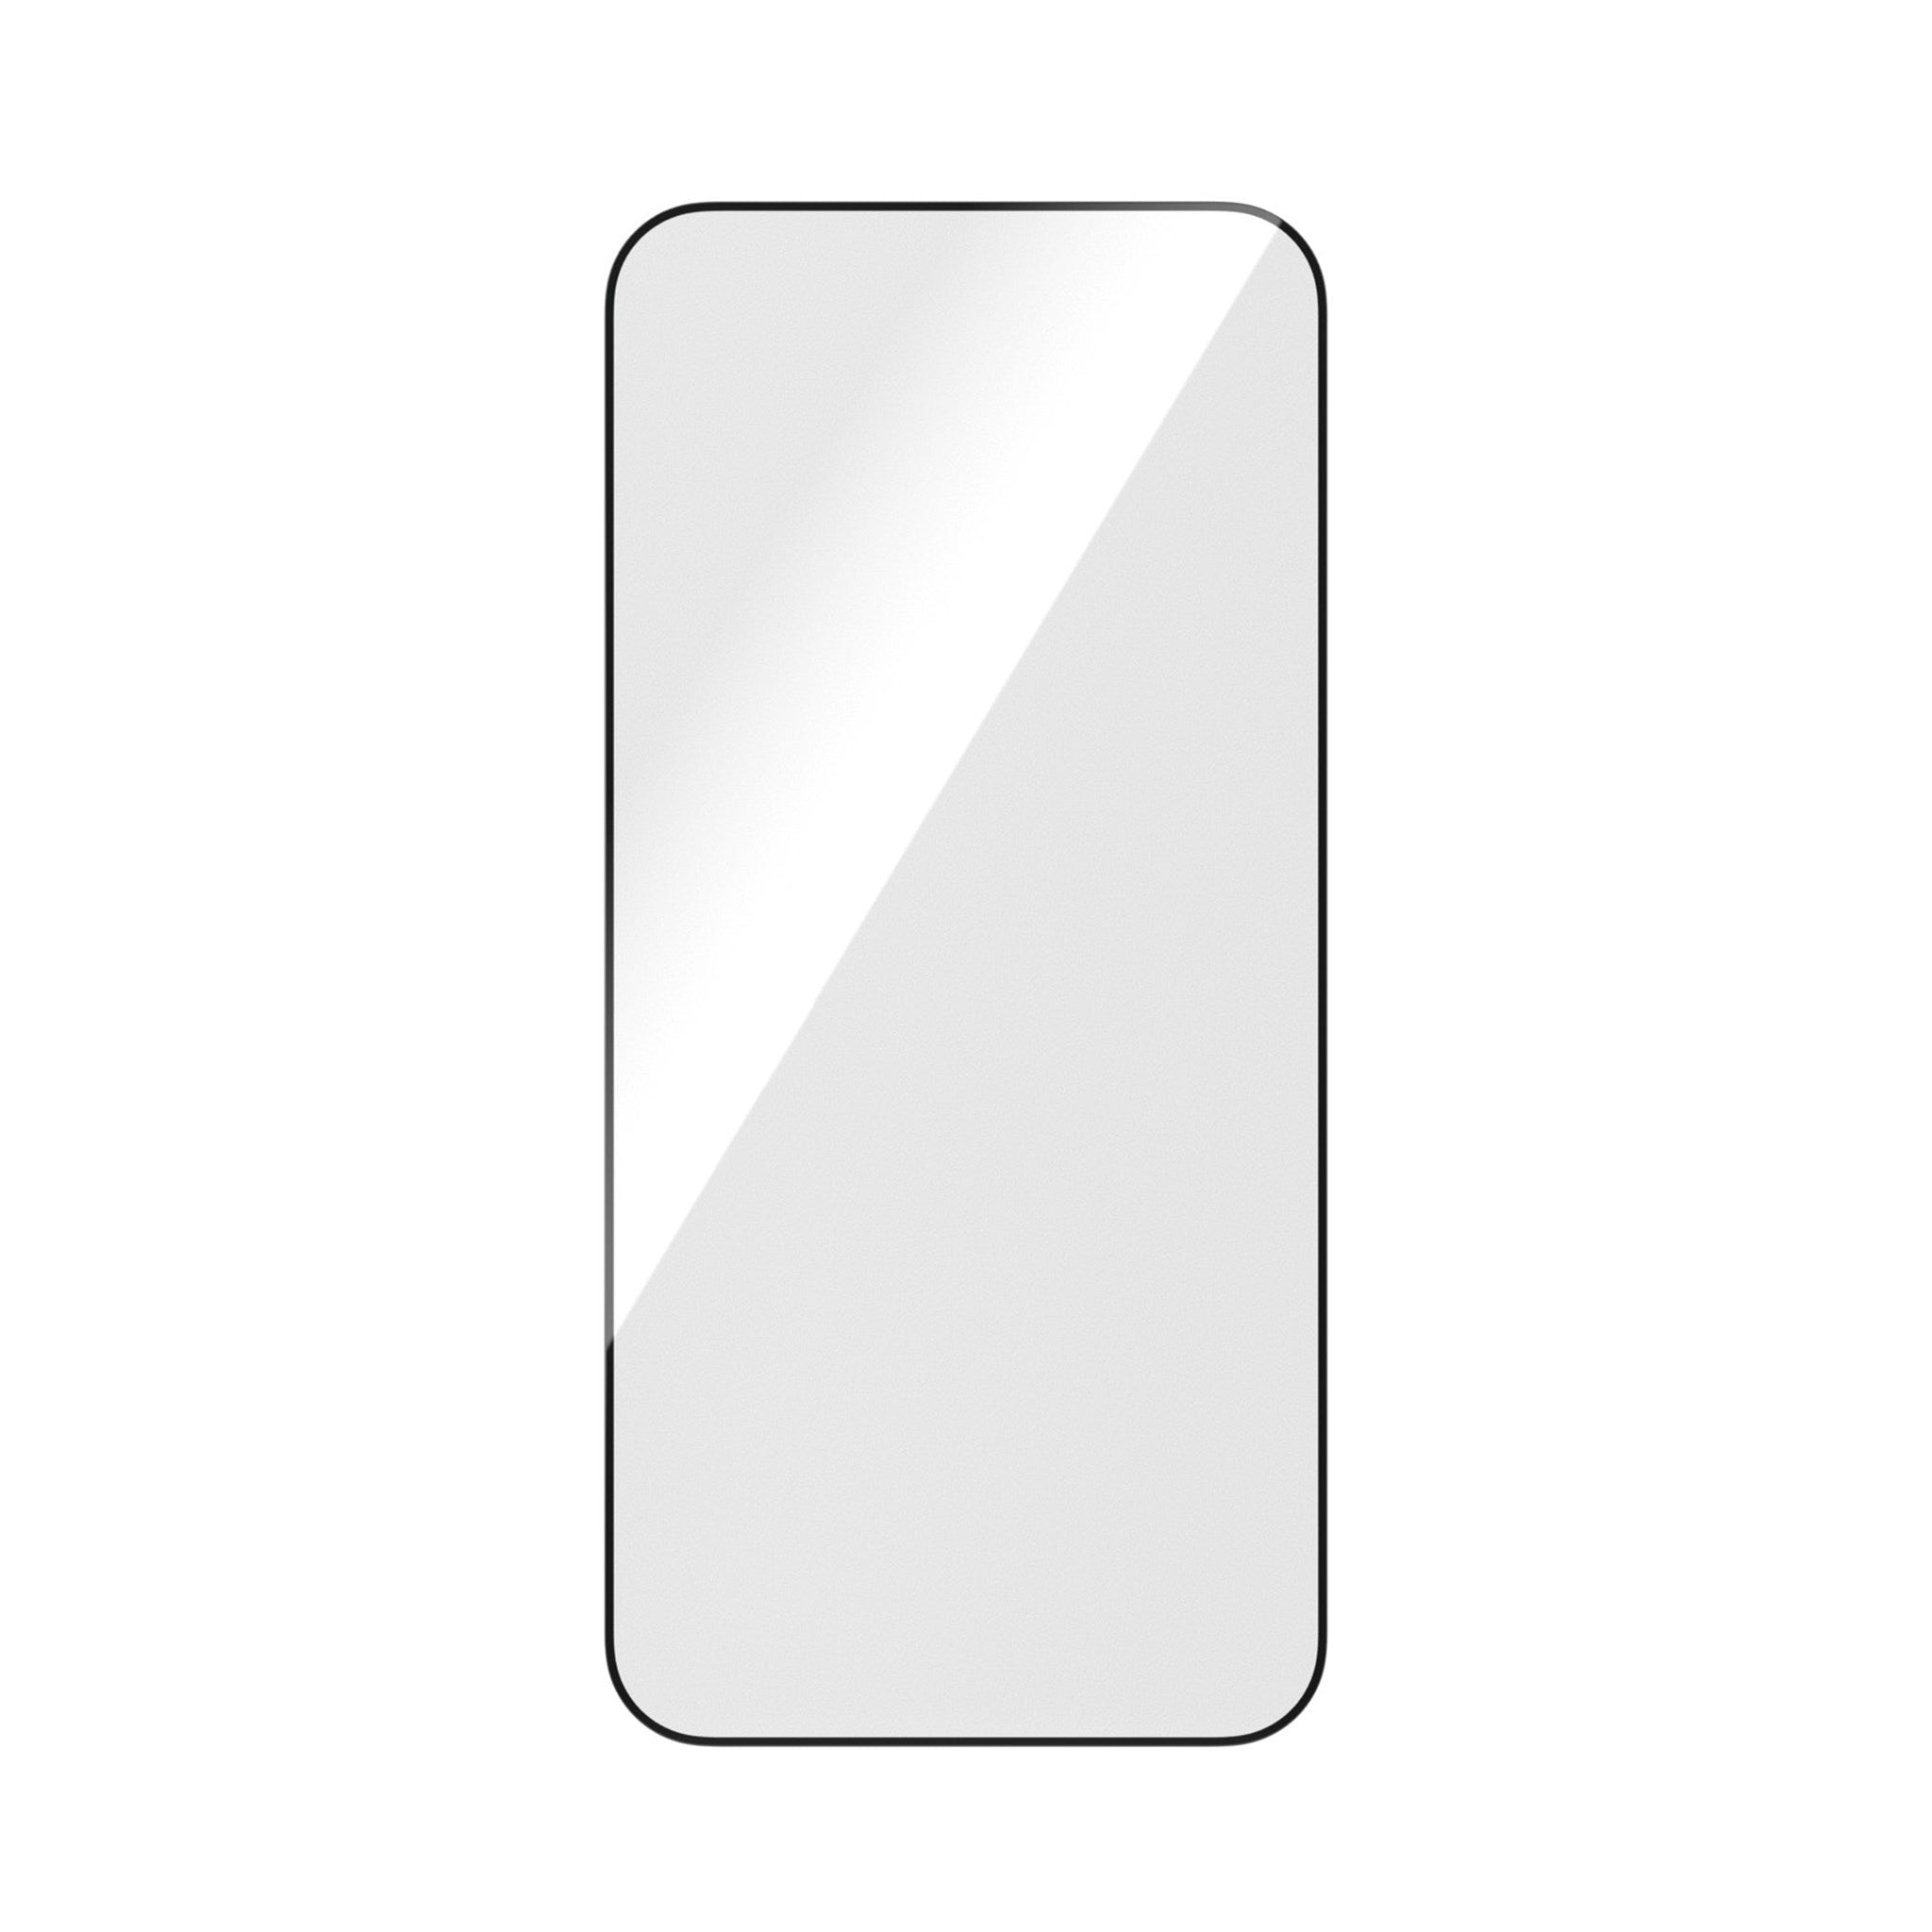 PanzerGlass Ultra-Wide Fit - Apple iPhone 15 Pro Verre trempé